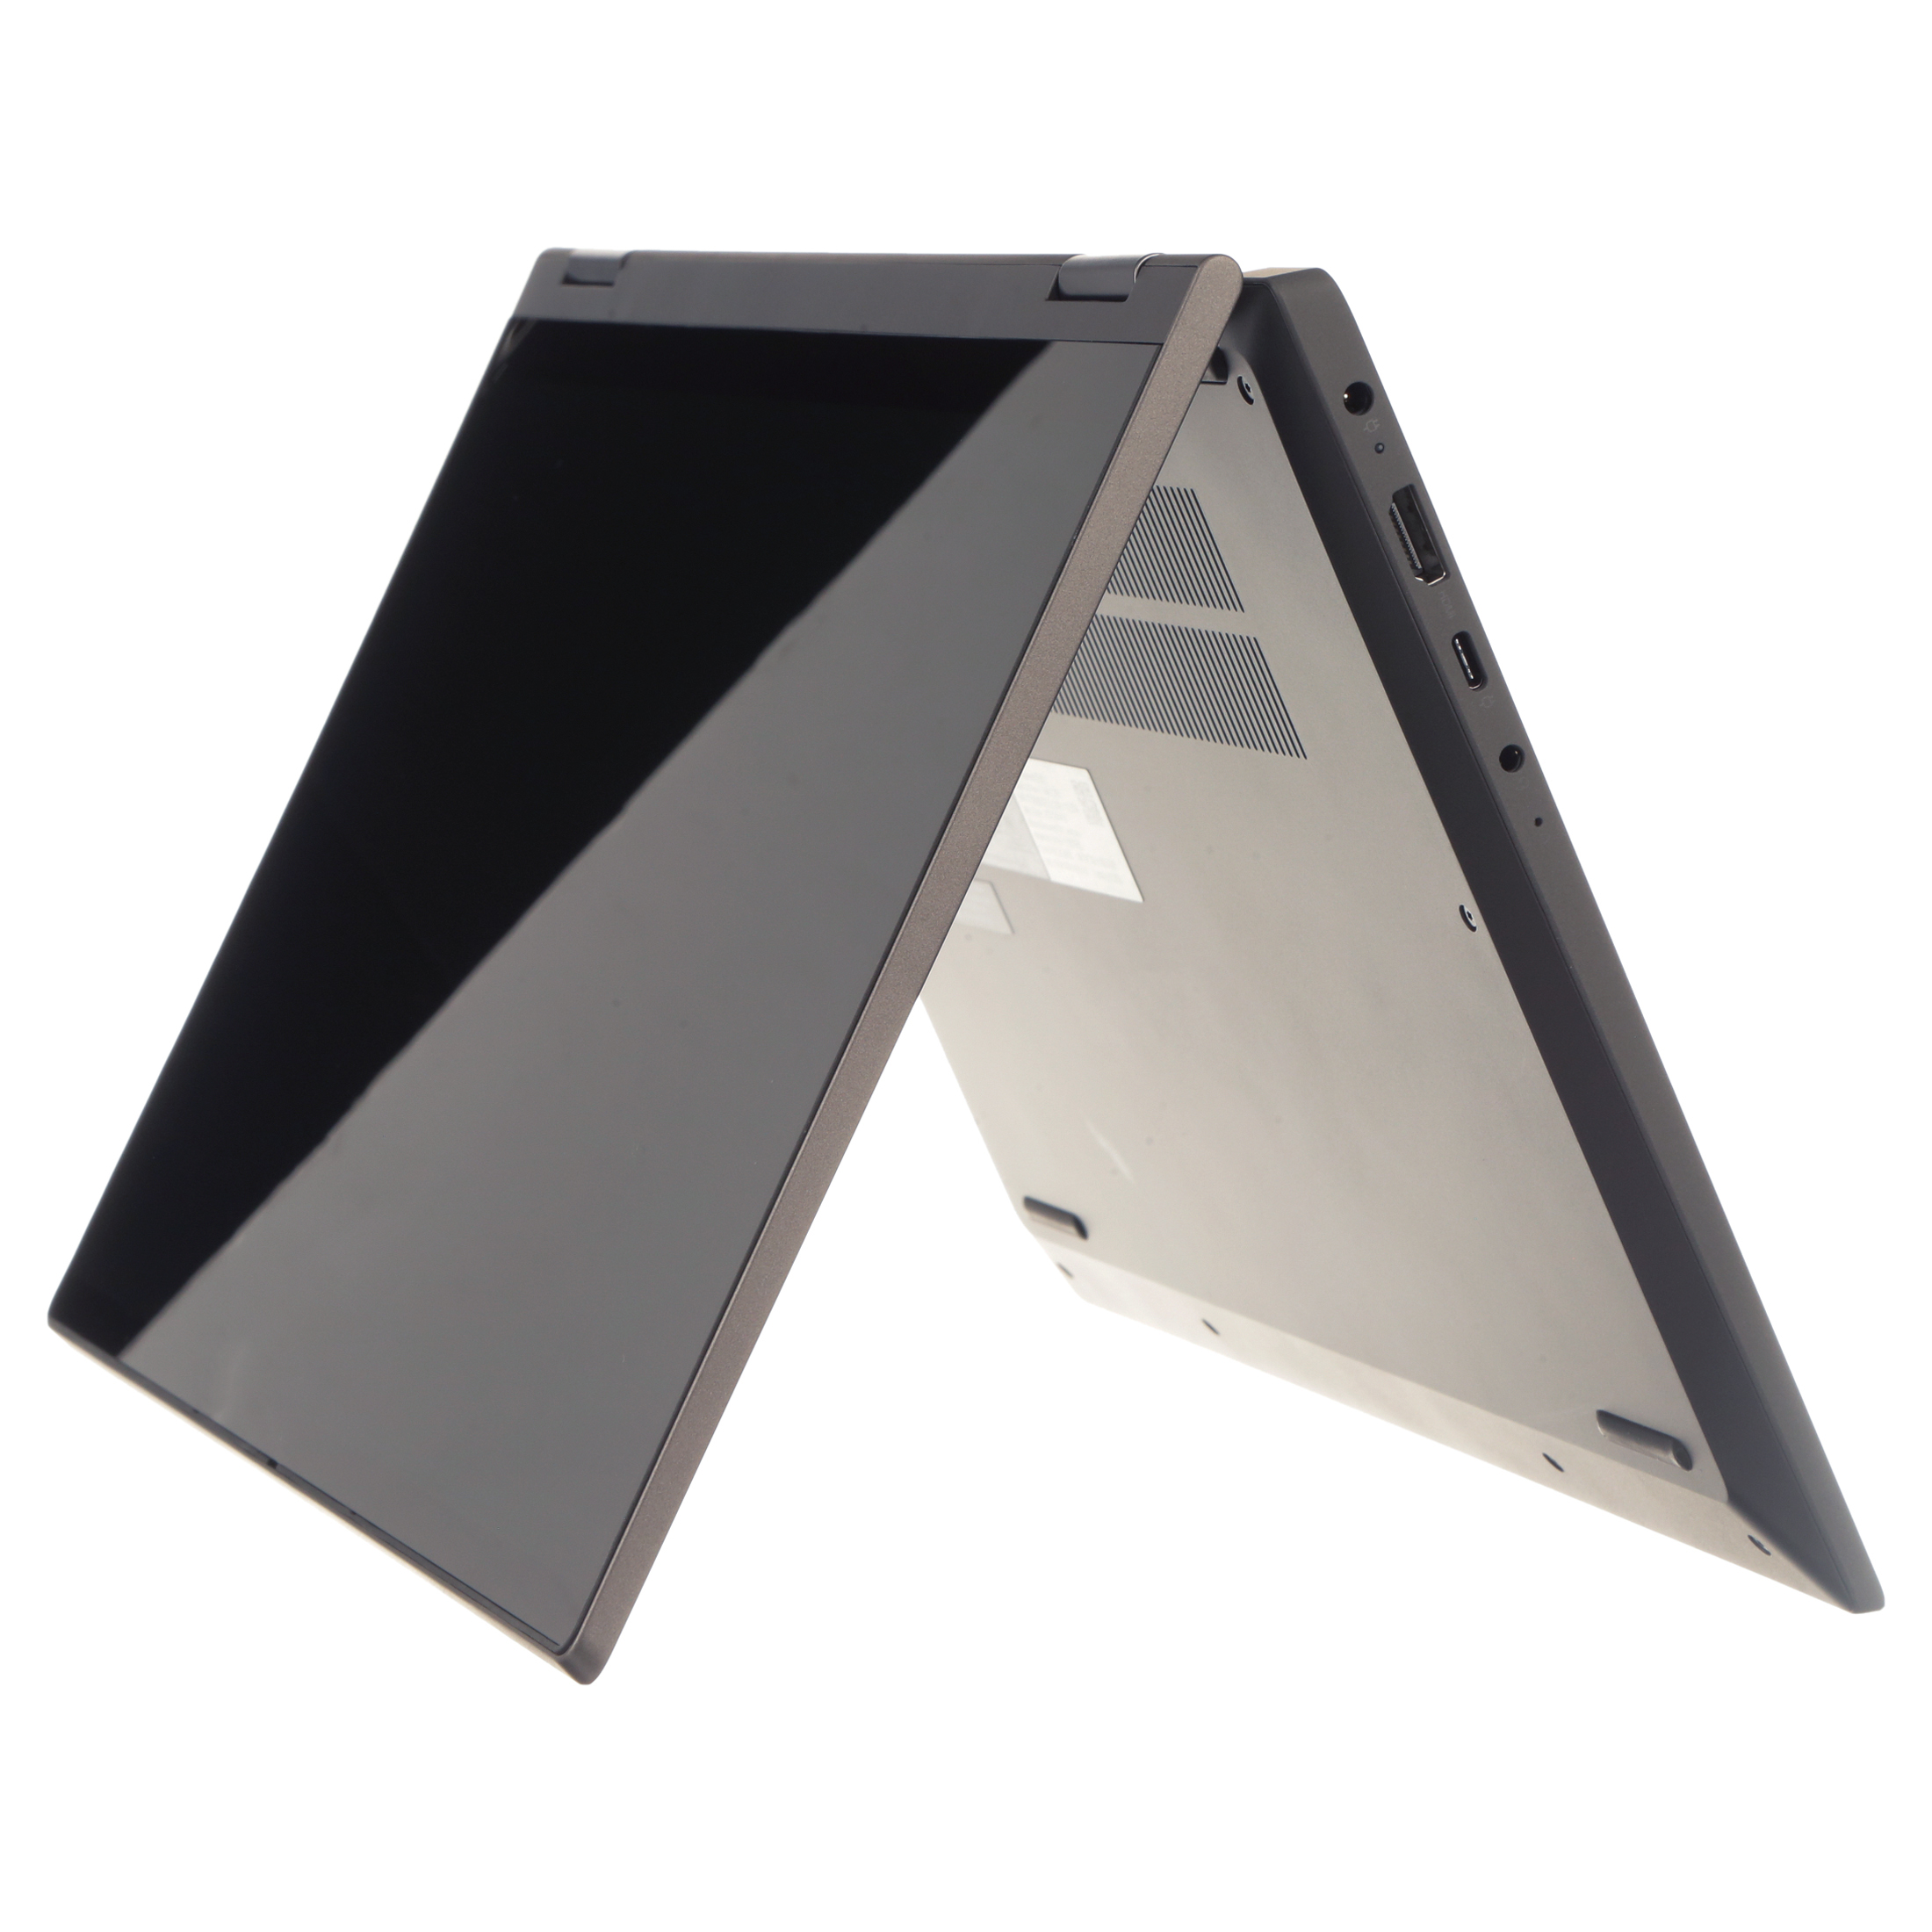 Lenovo Ideapad Flex 5 14" FHD 2-in-1 Touchscreen Laptop, AMD Ryzen 3, 4GB RAM, 128GB SSD, Graphite Gray, Windows 10, 82HU003JUS - image 2 of 21